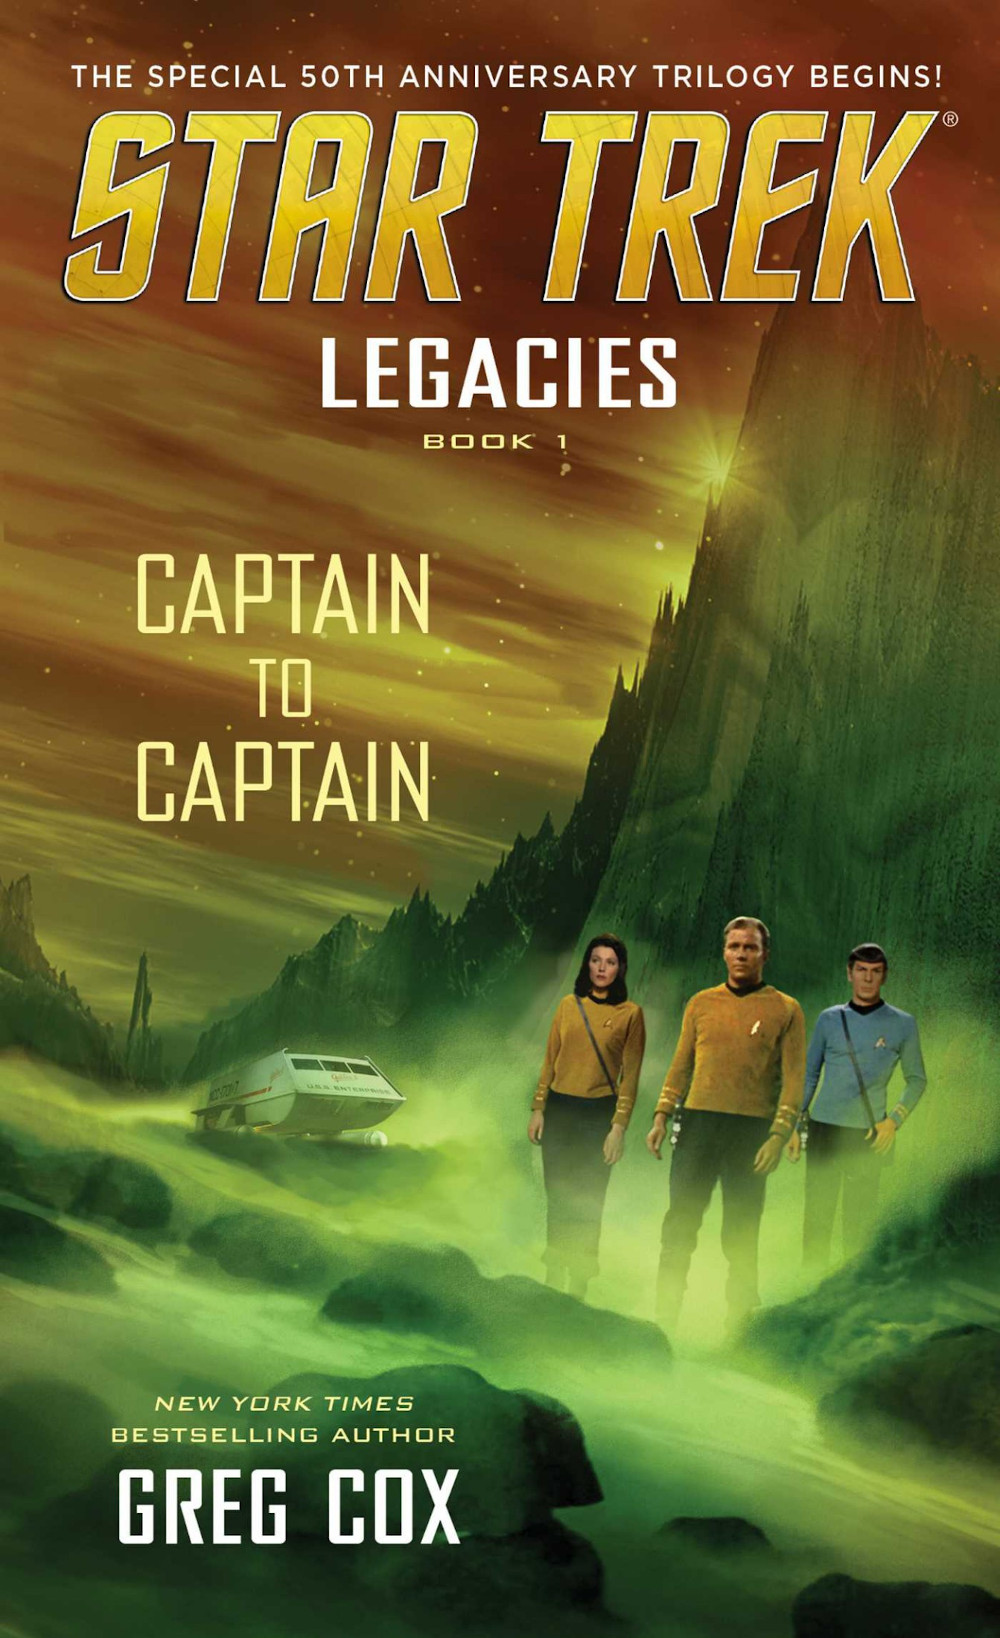 Legacies, Book 1: Captain to Captain (Jun 2016)